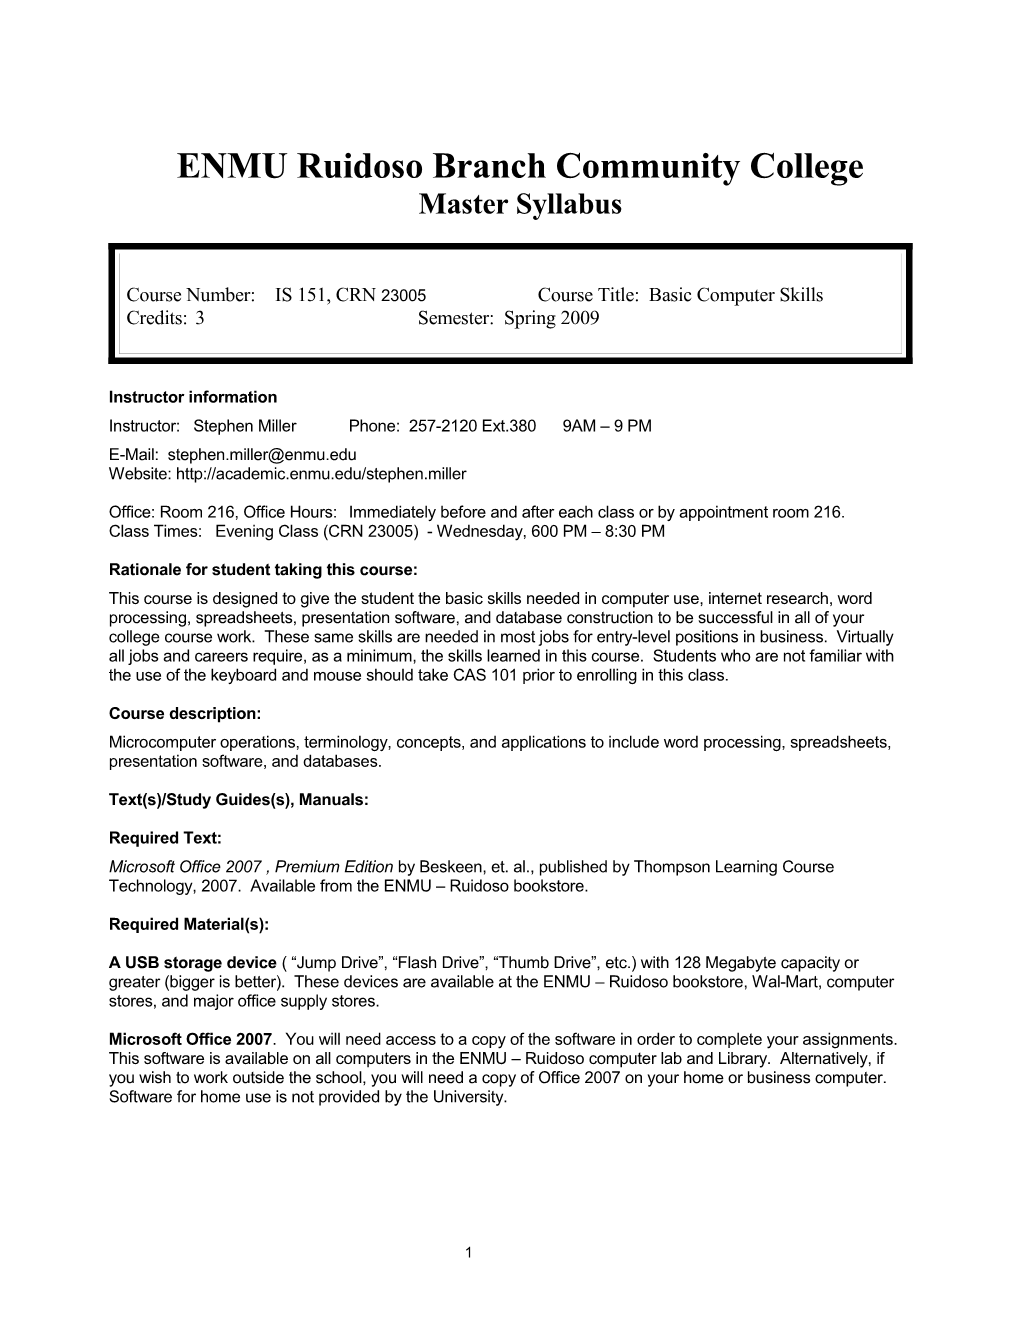 ENMU Ruidoso Branch Community College